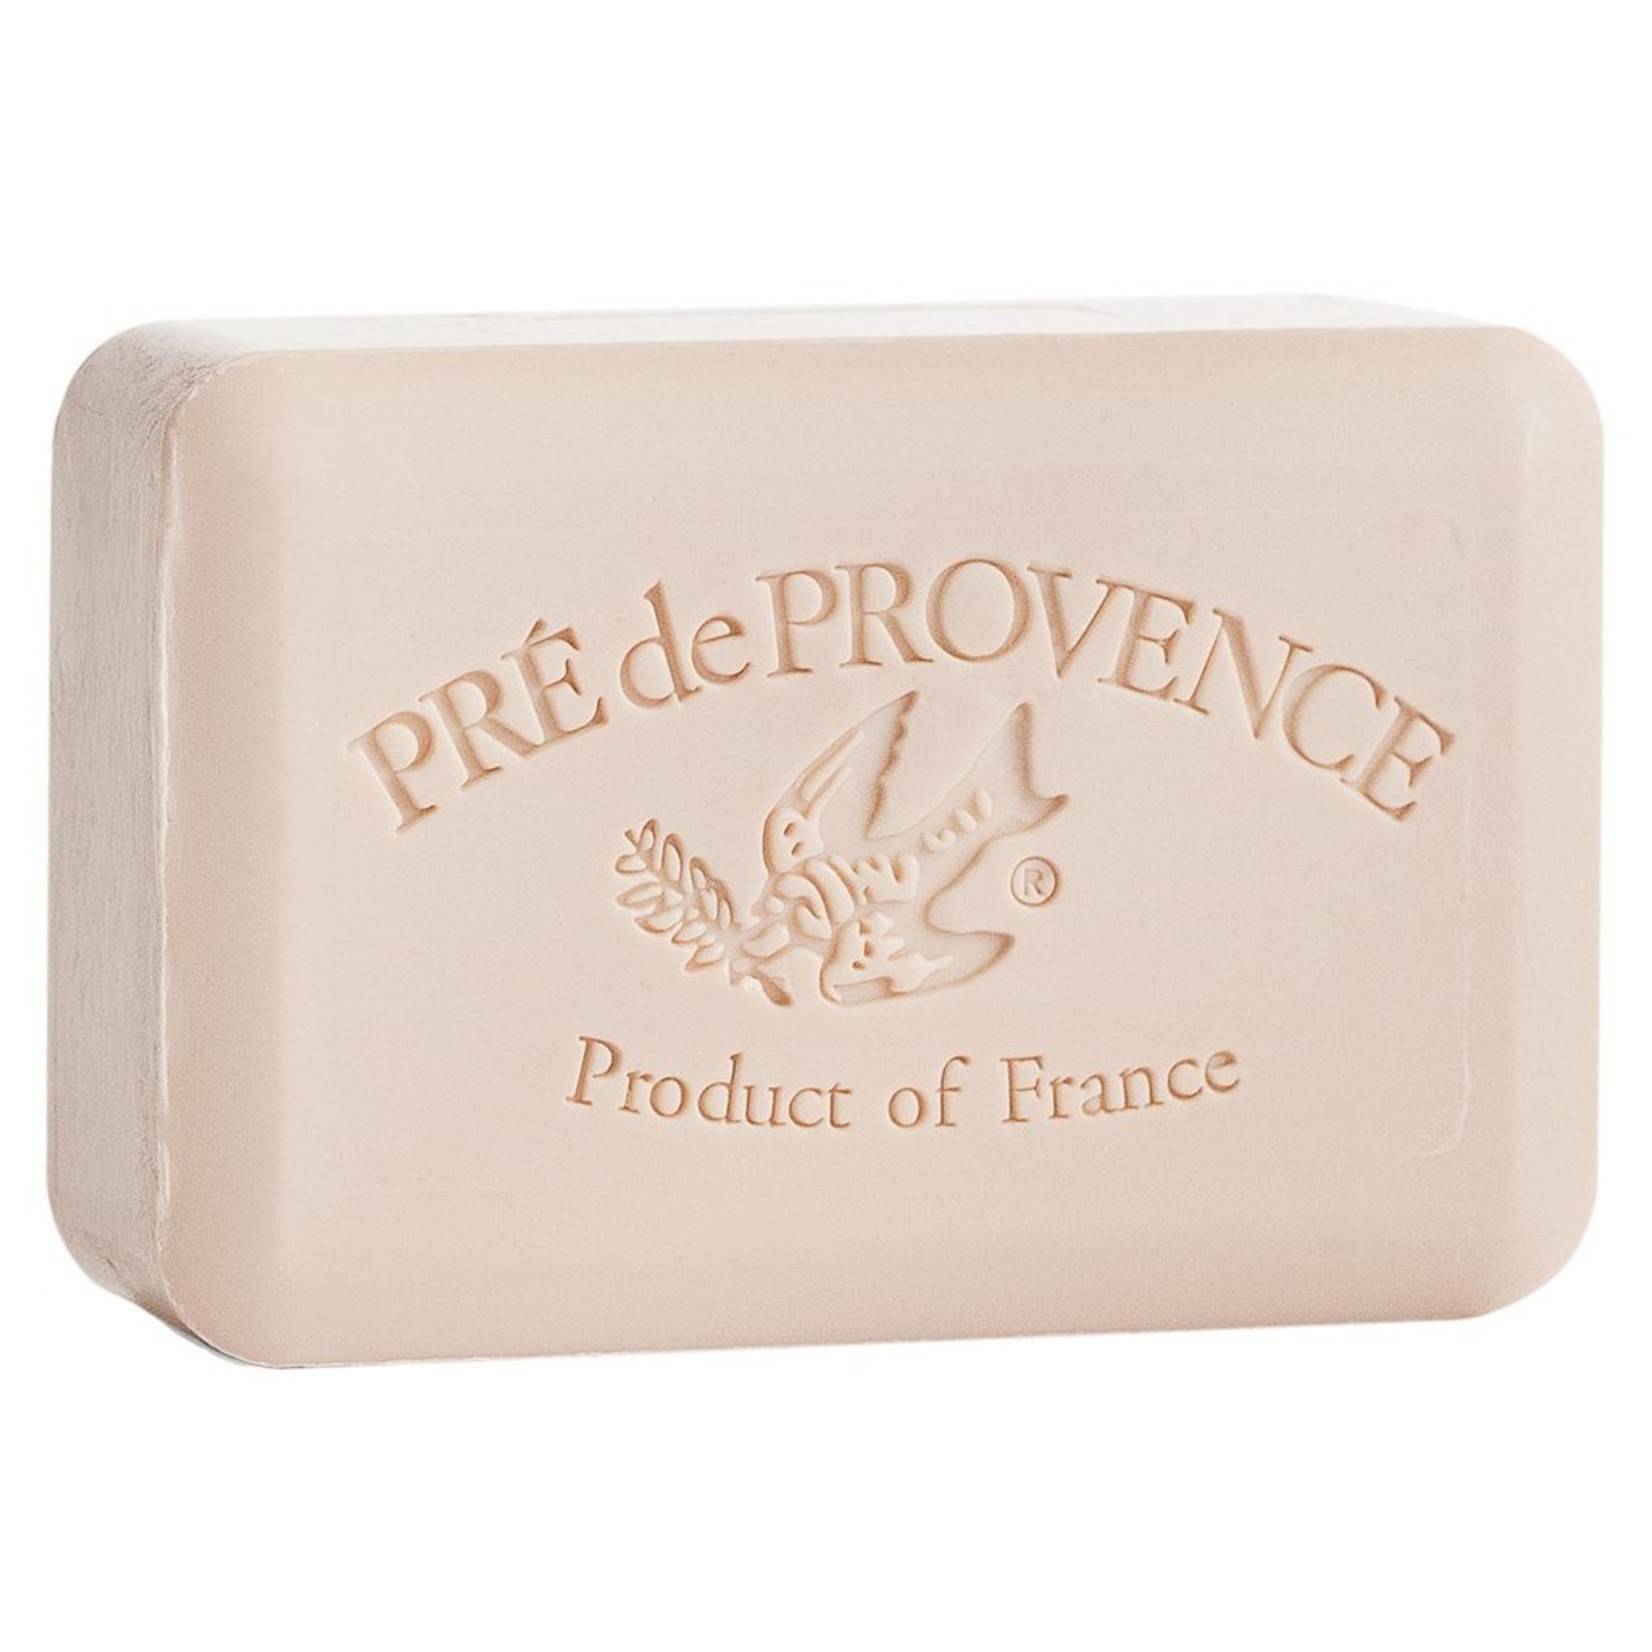 Pre de Provence Coconut Soap Bar